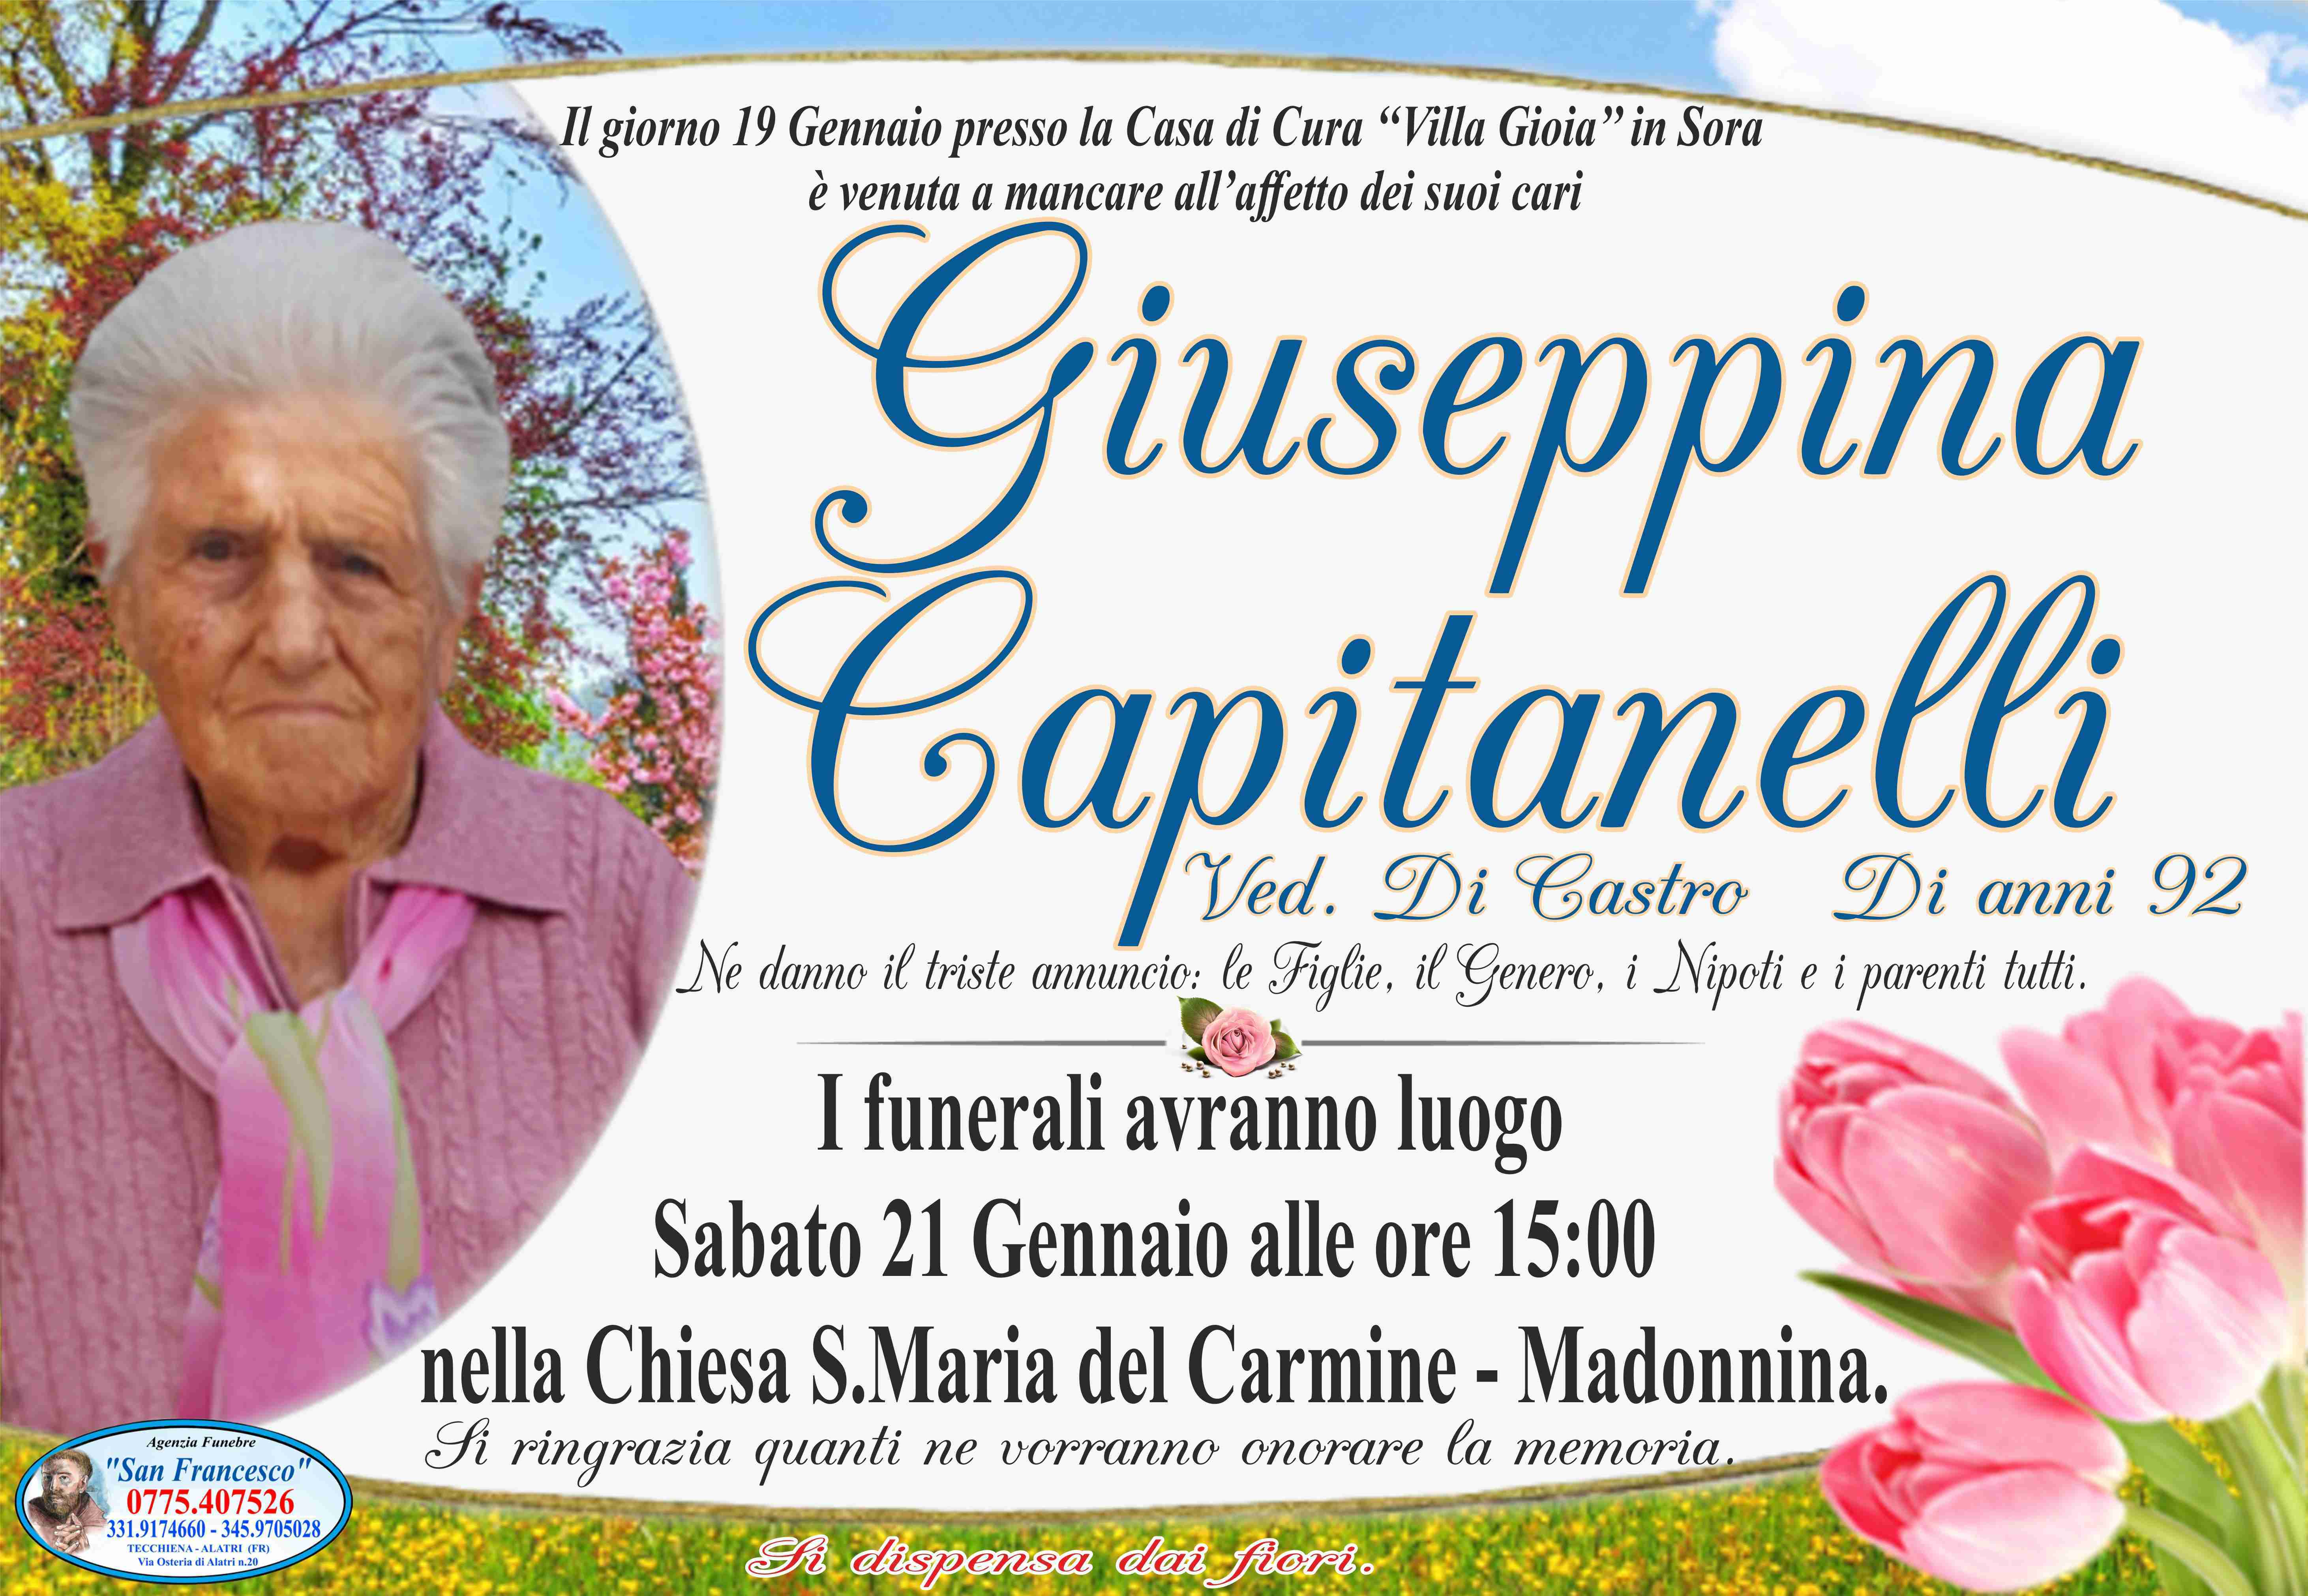 Giuseppina Capitanelli